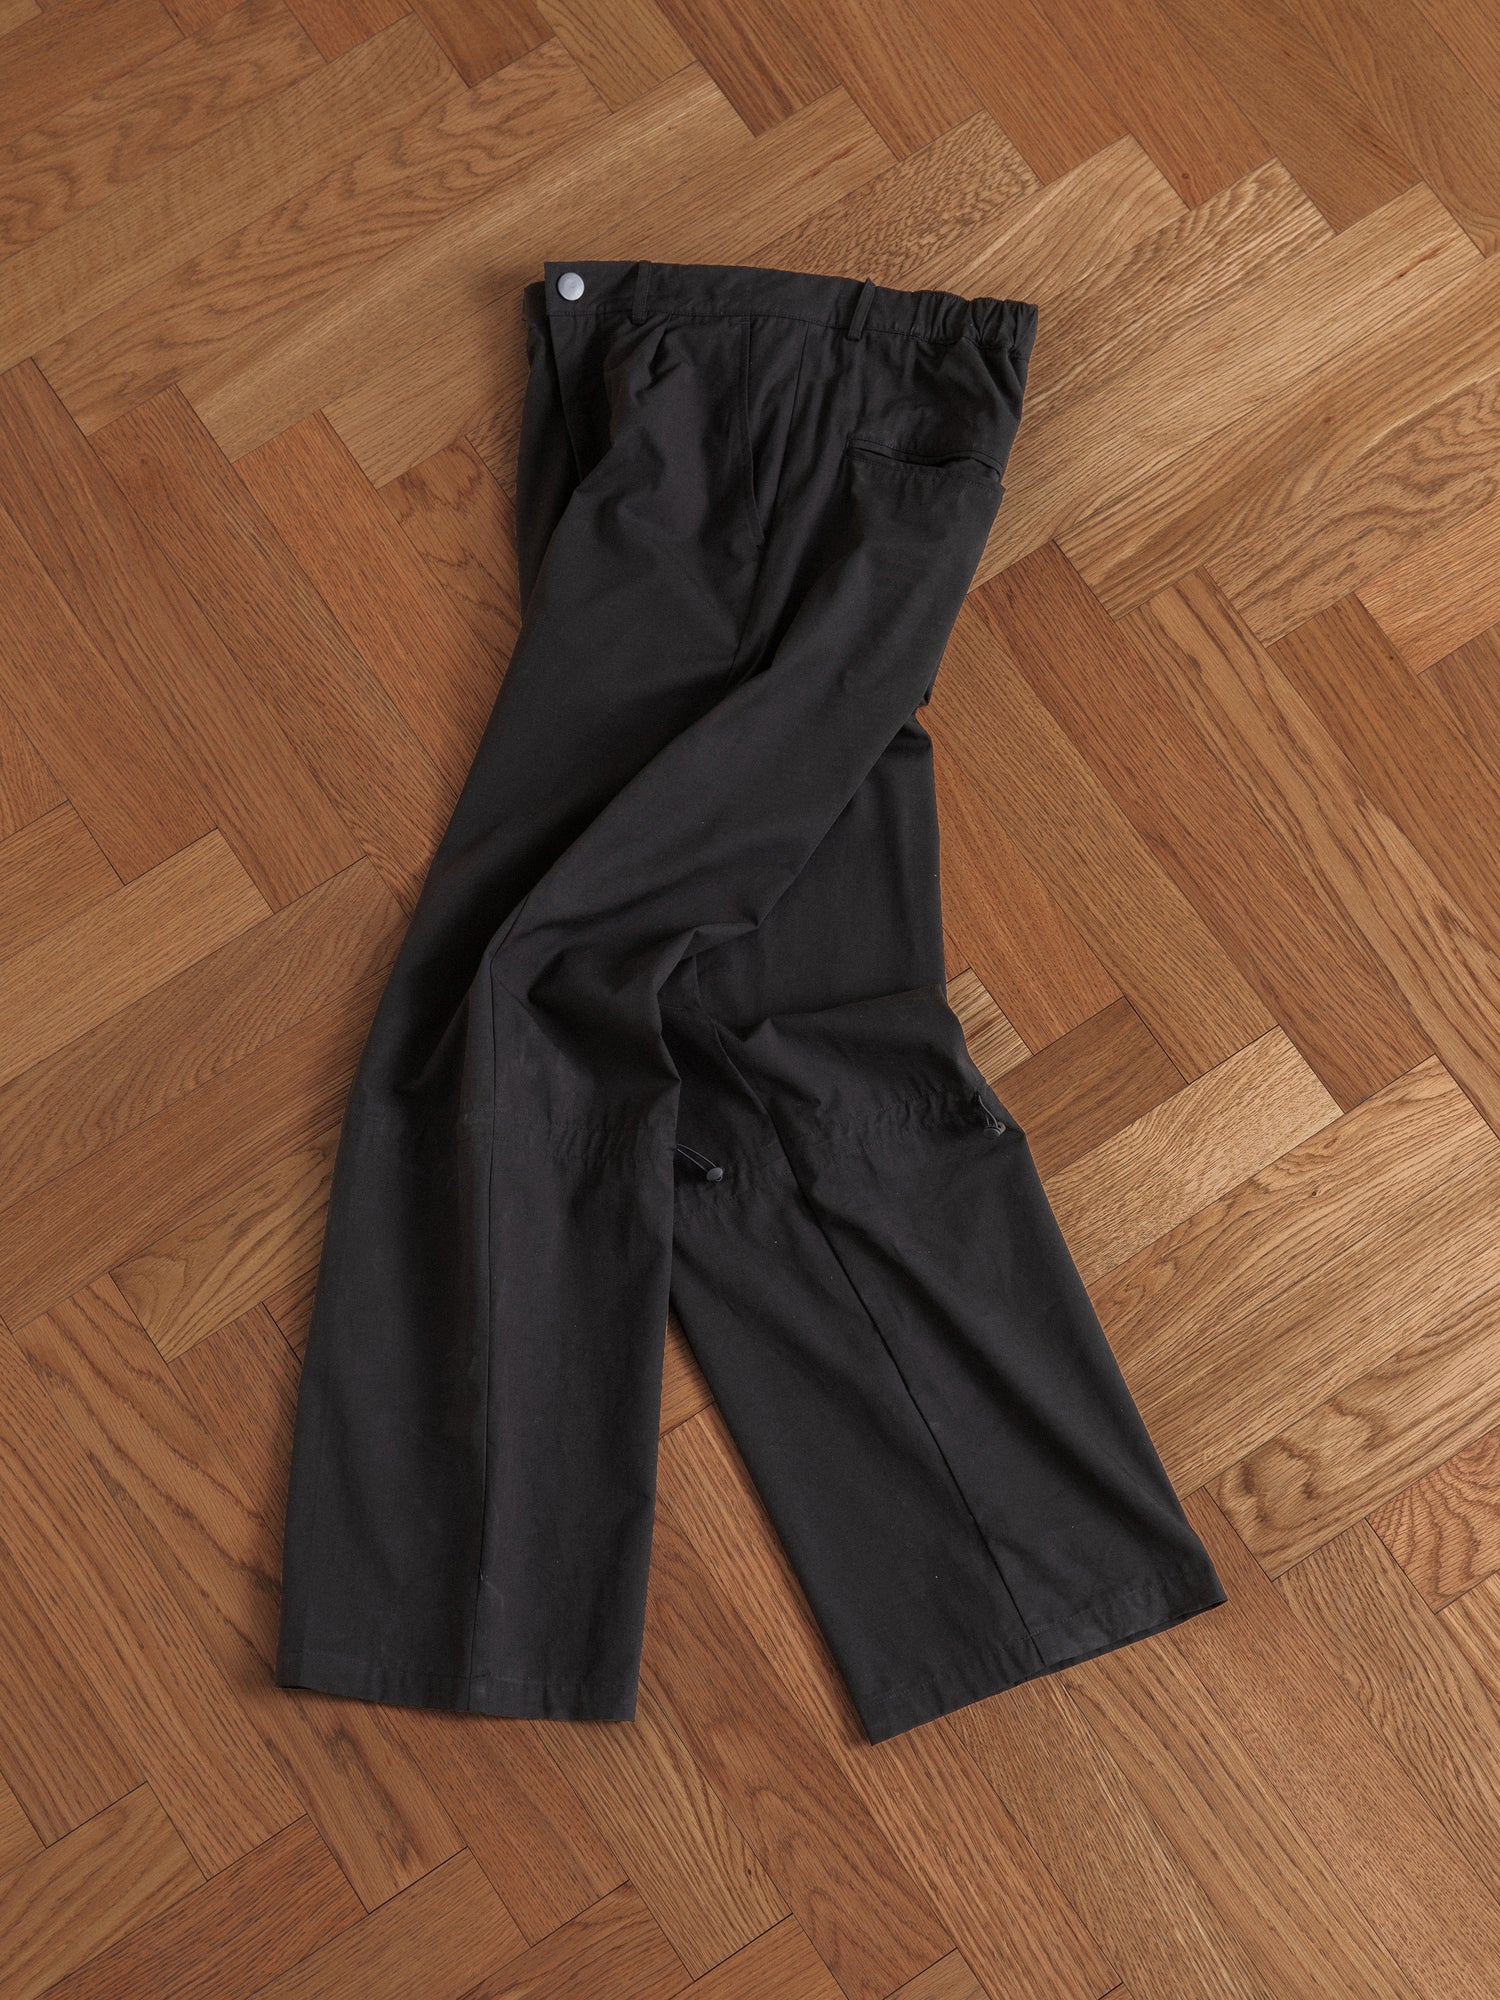 Black Tencel pleated pants from Found laid flat on a herringbone wooden floor.